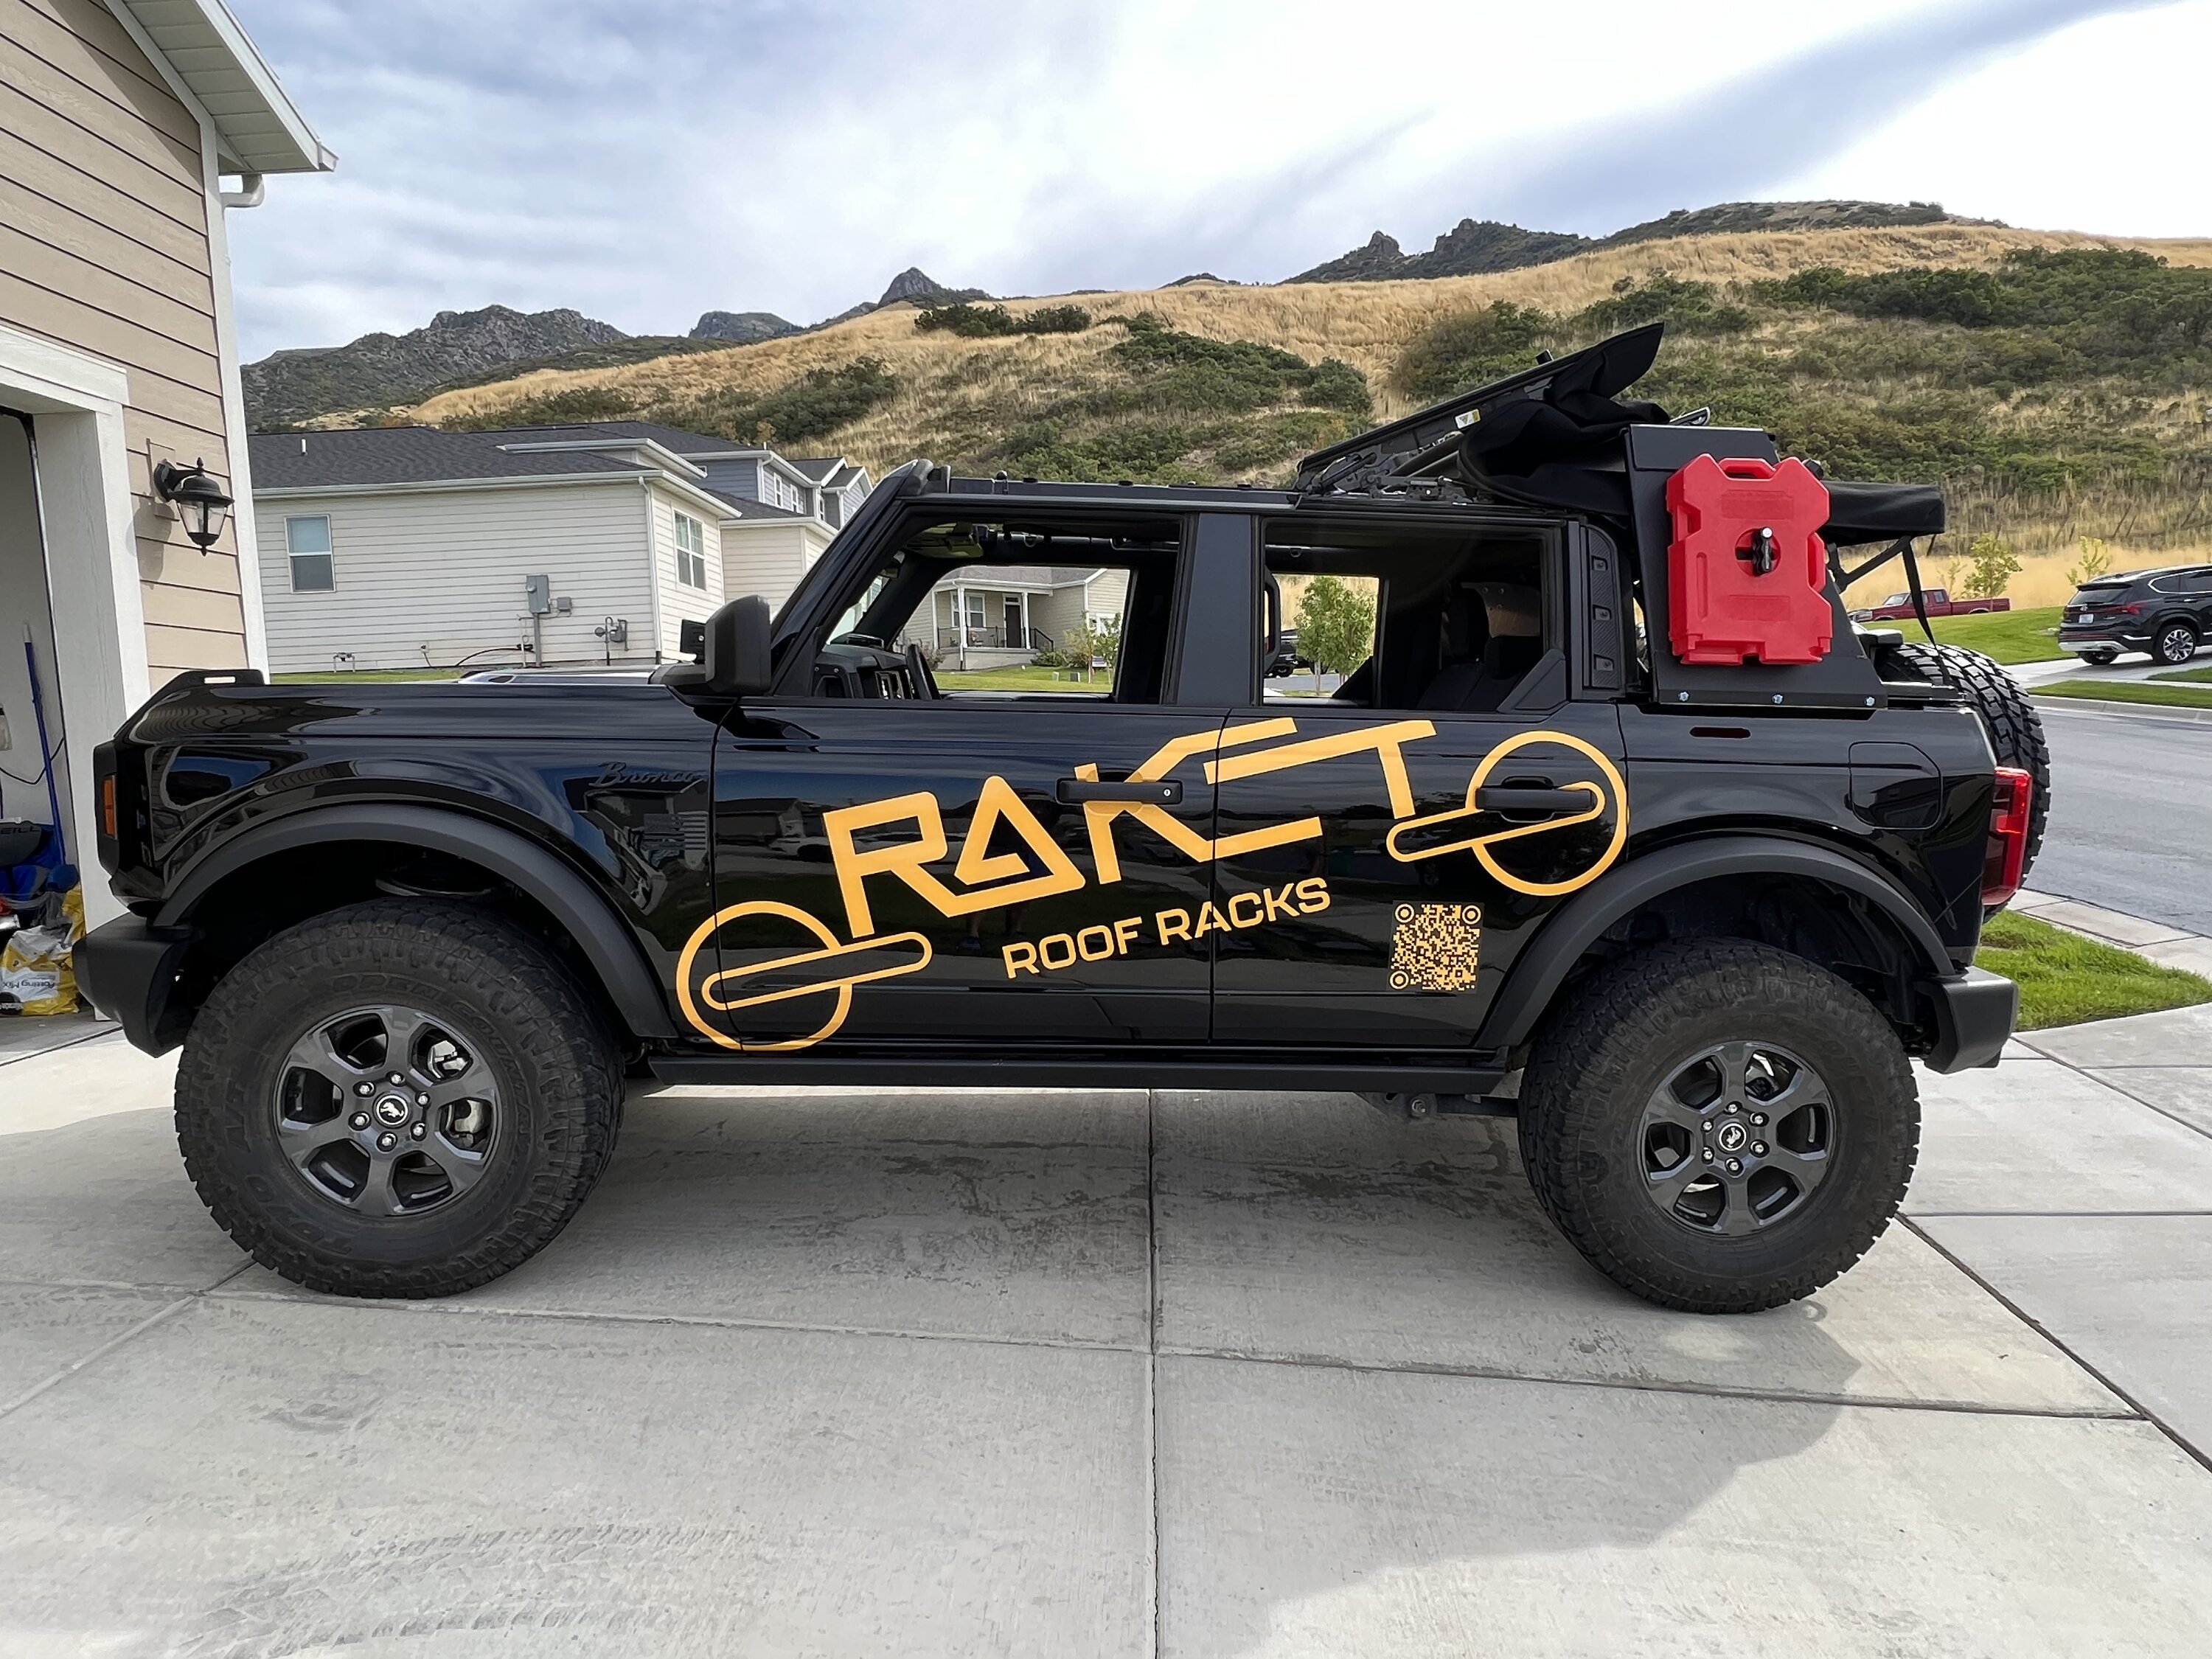 Ford Bronco Updated: RAKET “Multi-Top” Roof Rack DABE83B0-1B99-4D86-B8EB-B7743DF5C9A2